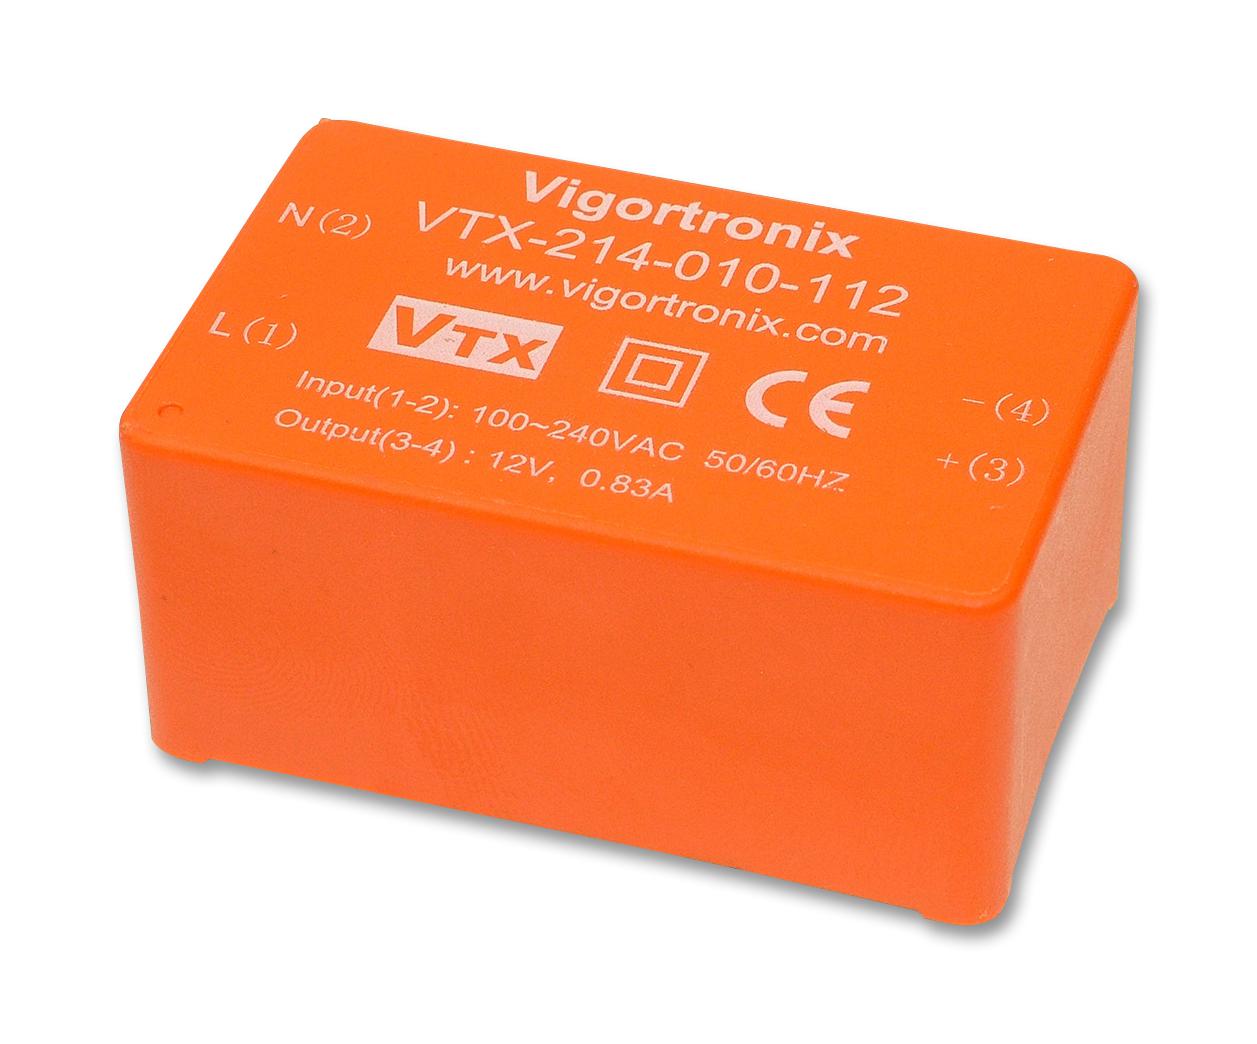 VTX-214-010-112 AC-DC CONV, FIXED, 1 O/P, 10W, 12V VIGORTRONIX